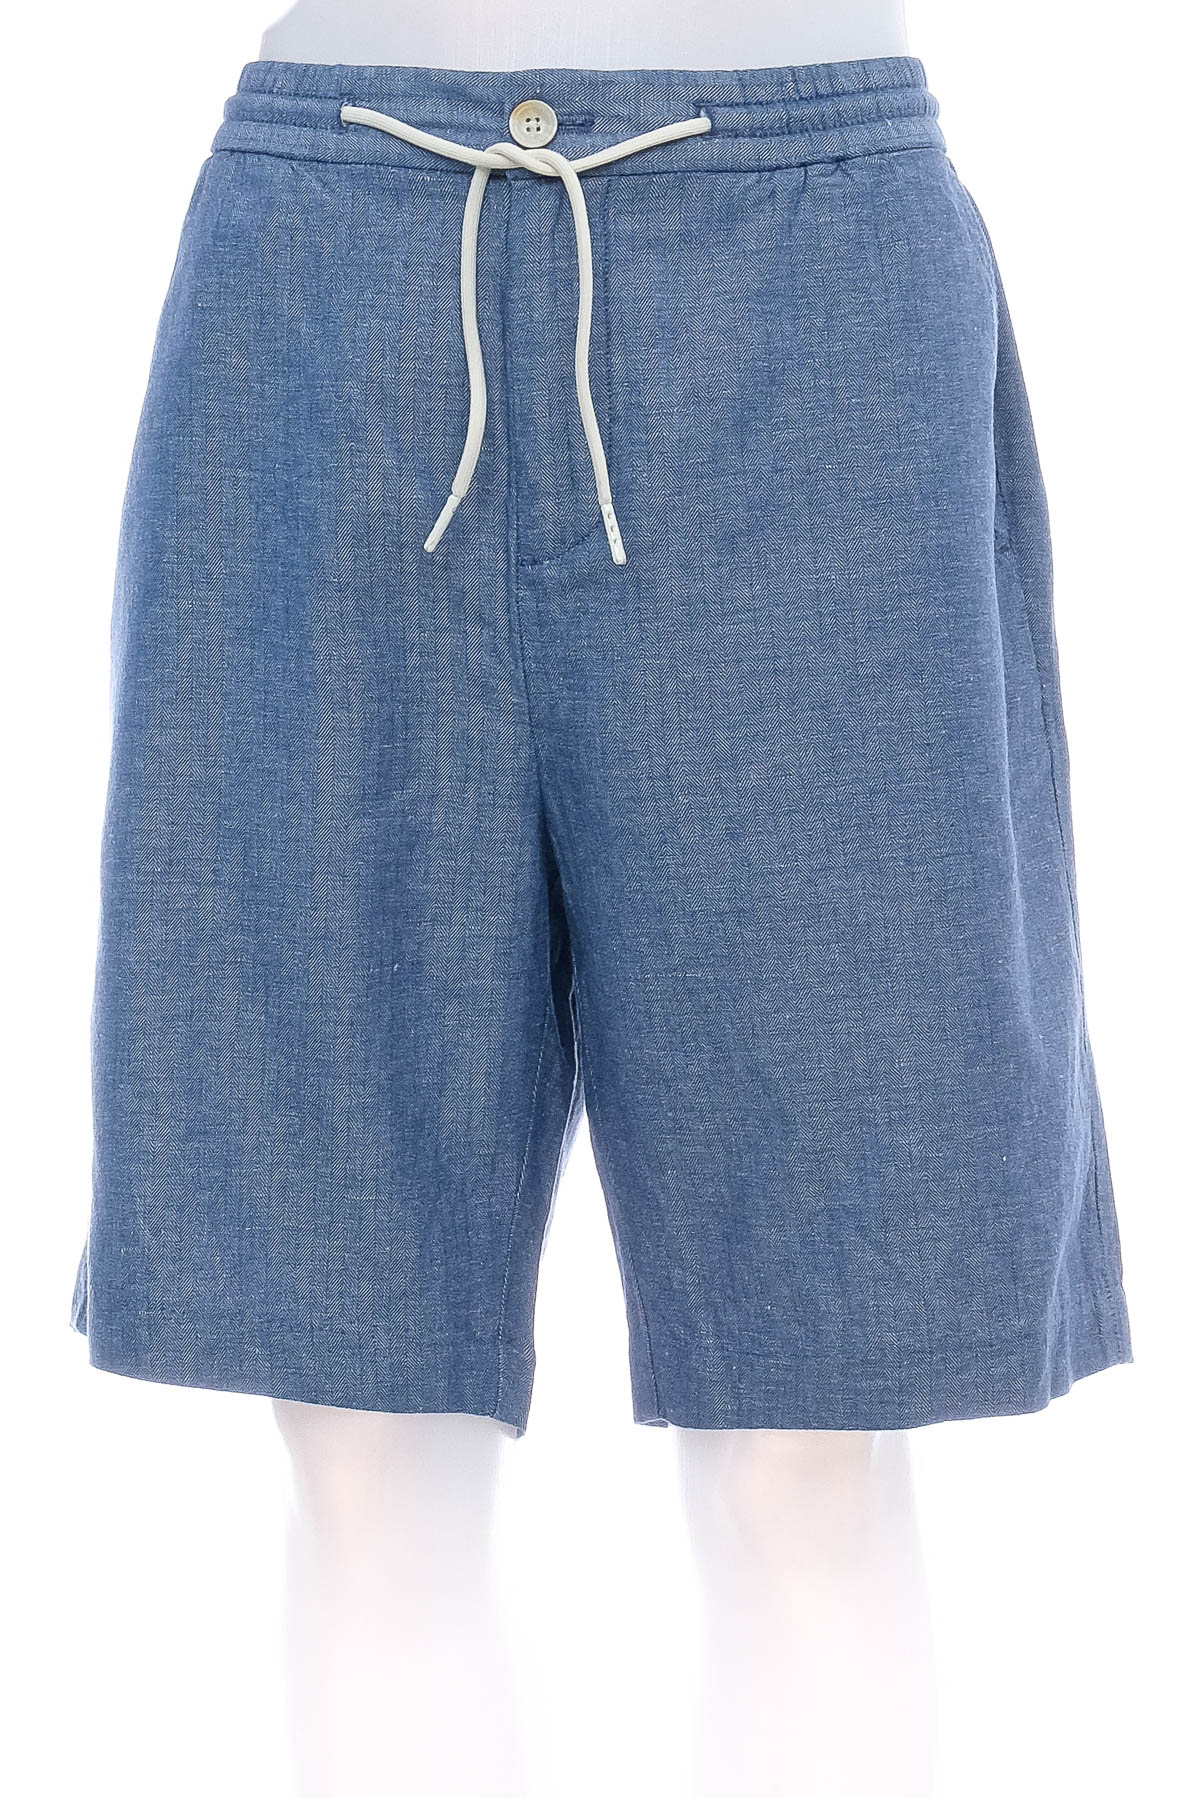 Men's shorts - SCOTCH & SODA - 0